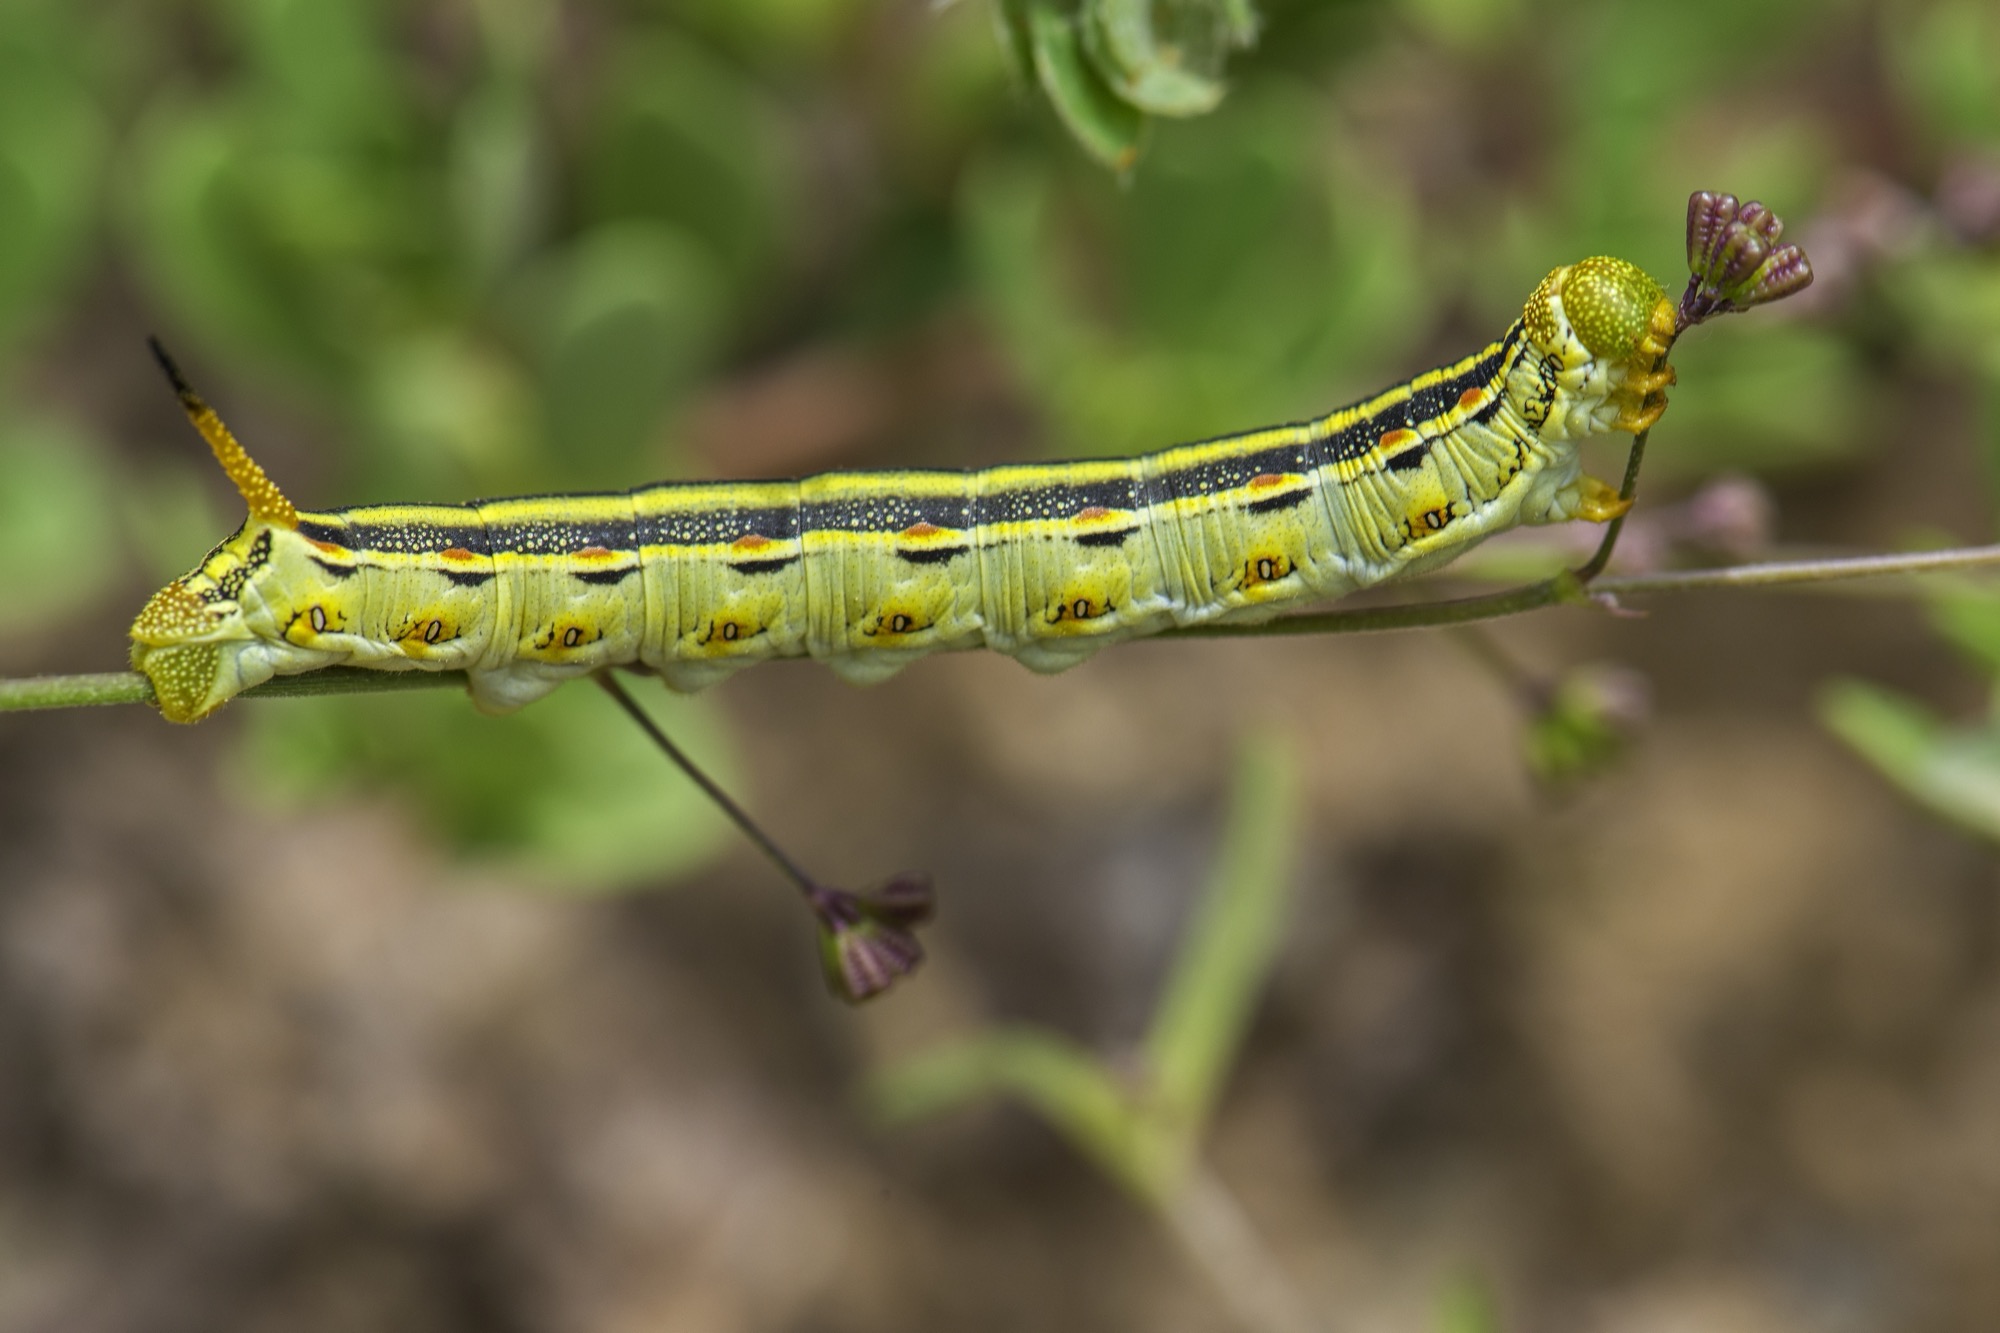 A caterpillar stretching